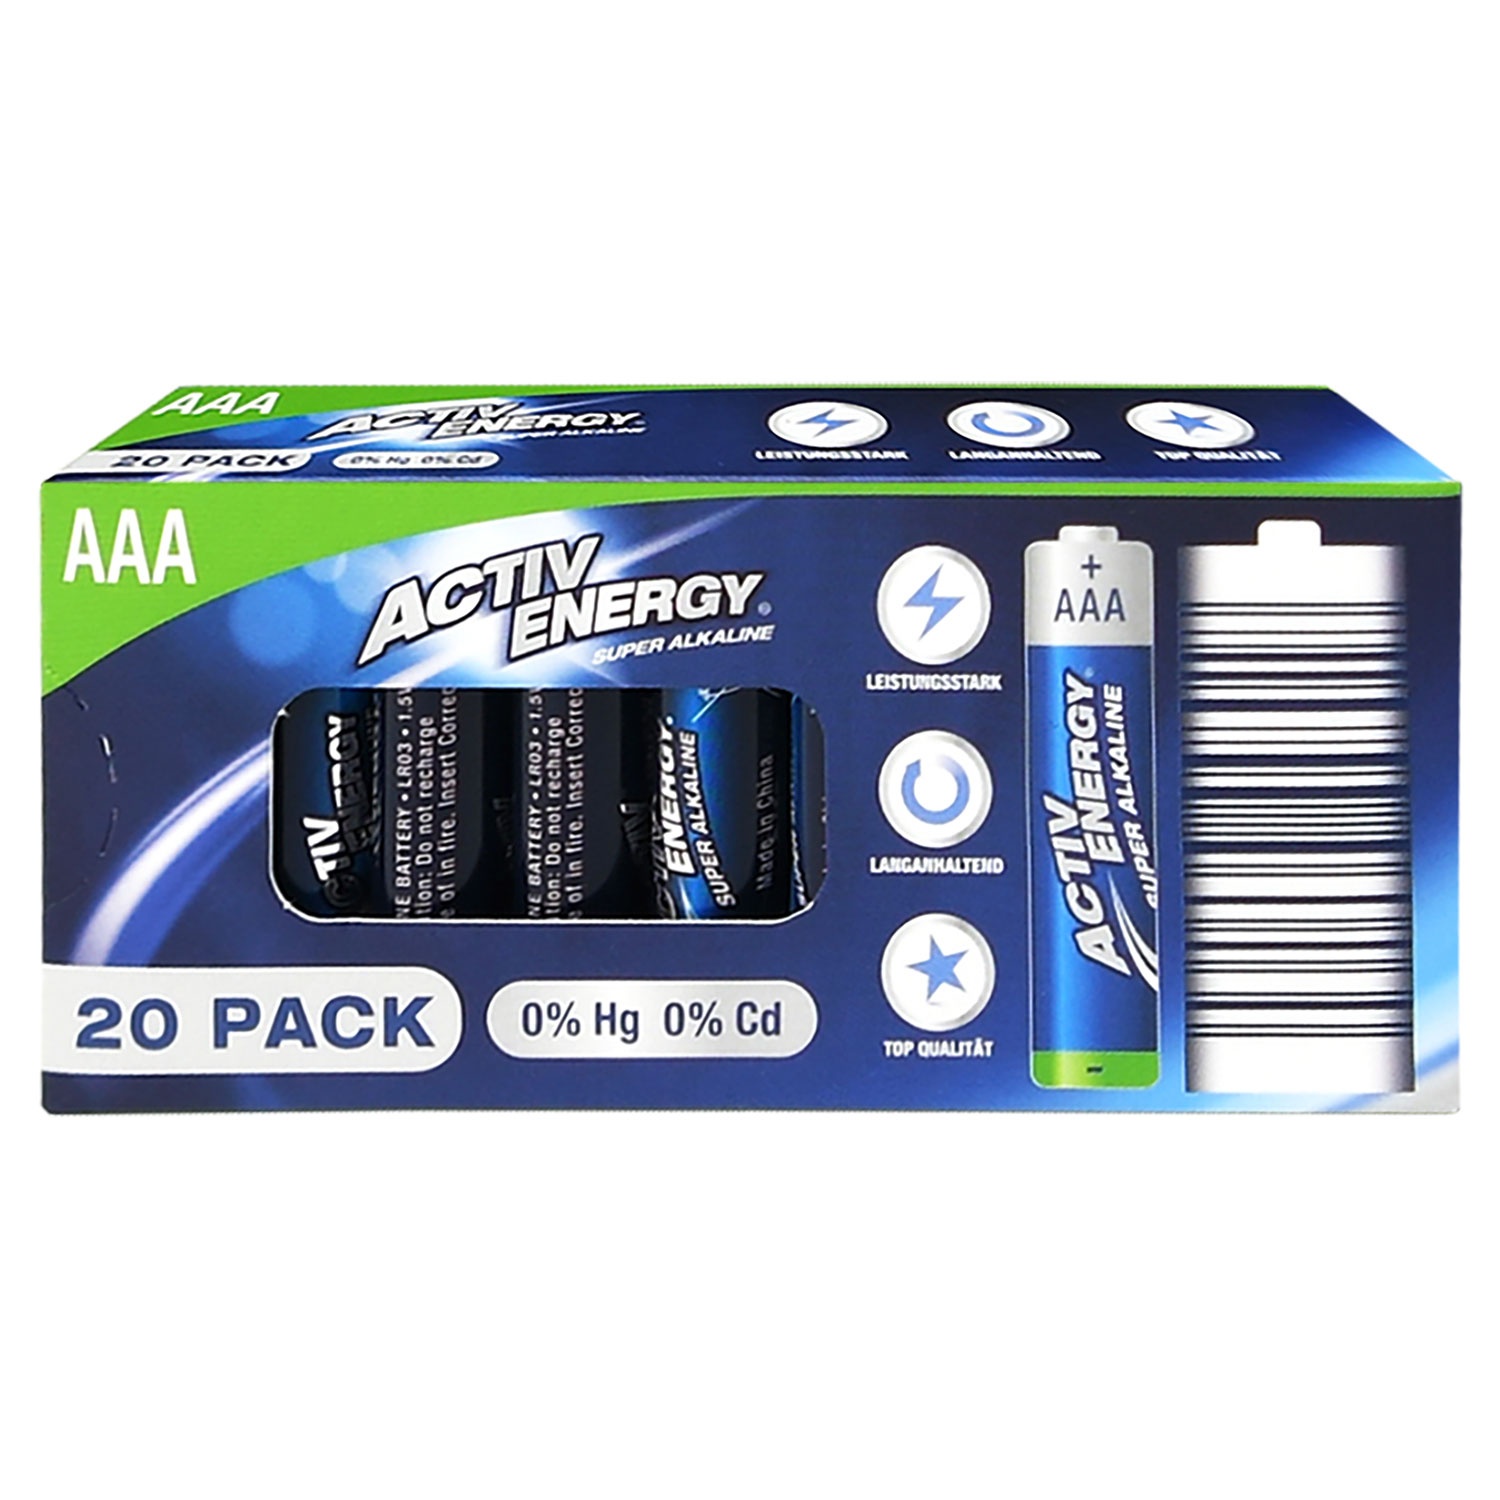 ACTIV ENERGY Batterien AA oder AAA, 20er-Packung